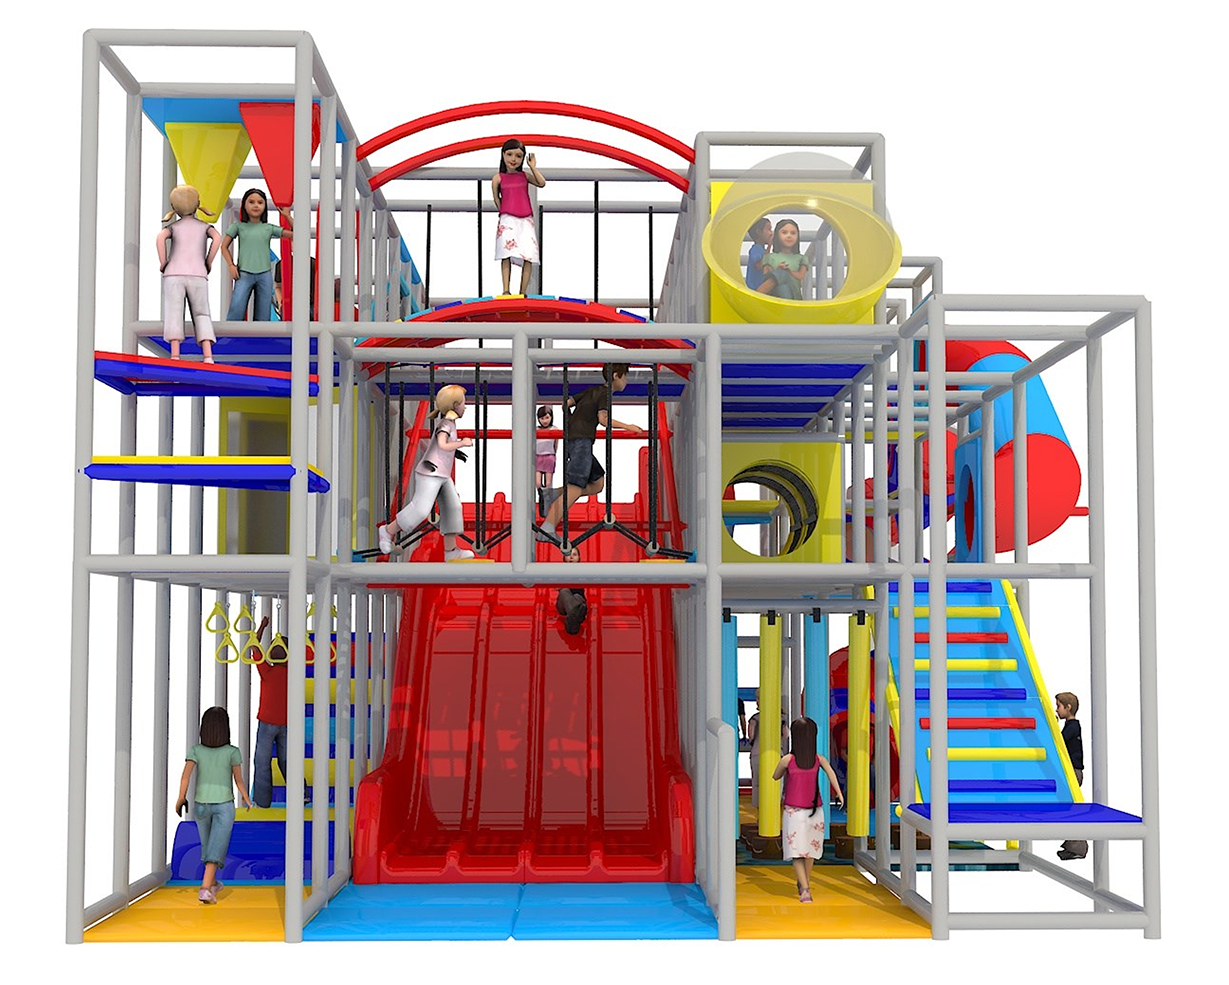 kplay_0003_kplay-indoor-playground-16.png